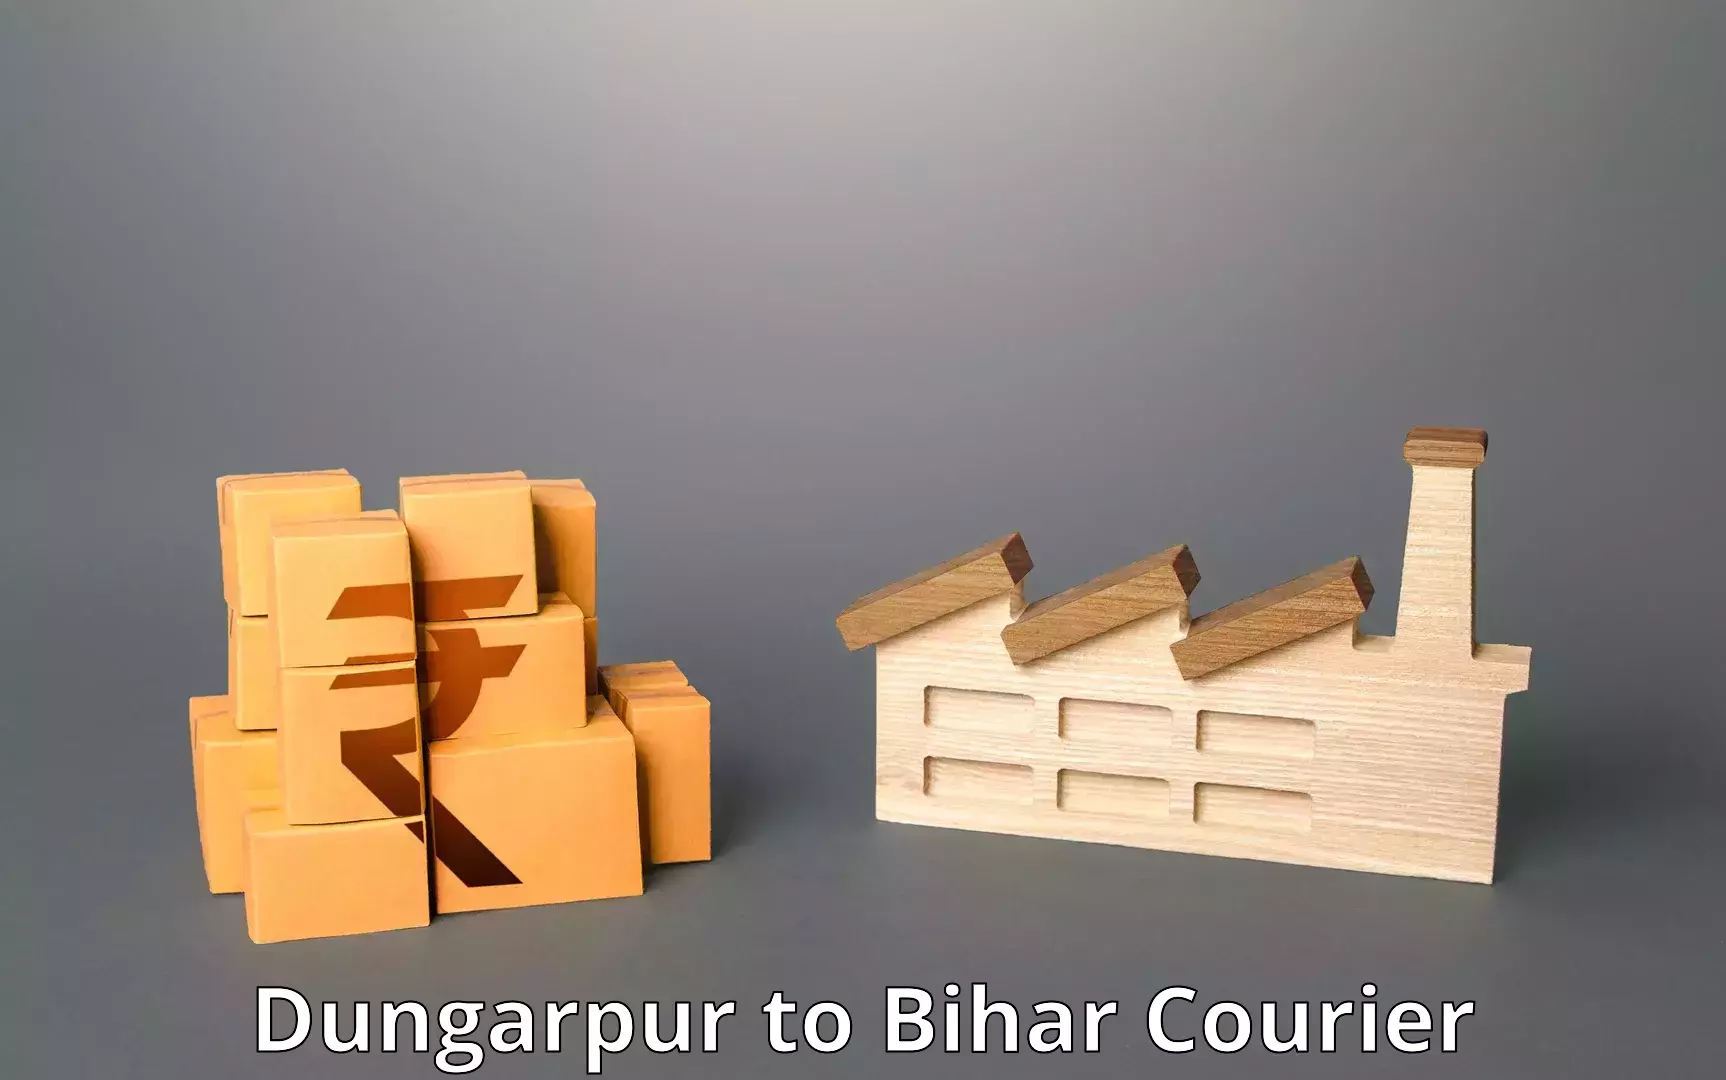 User-friendly courier app Dungarpur to Baniapur